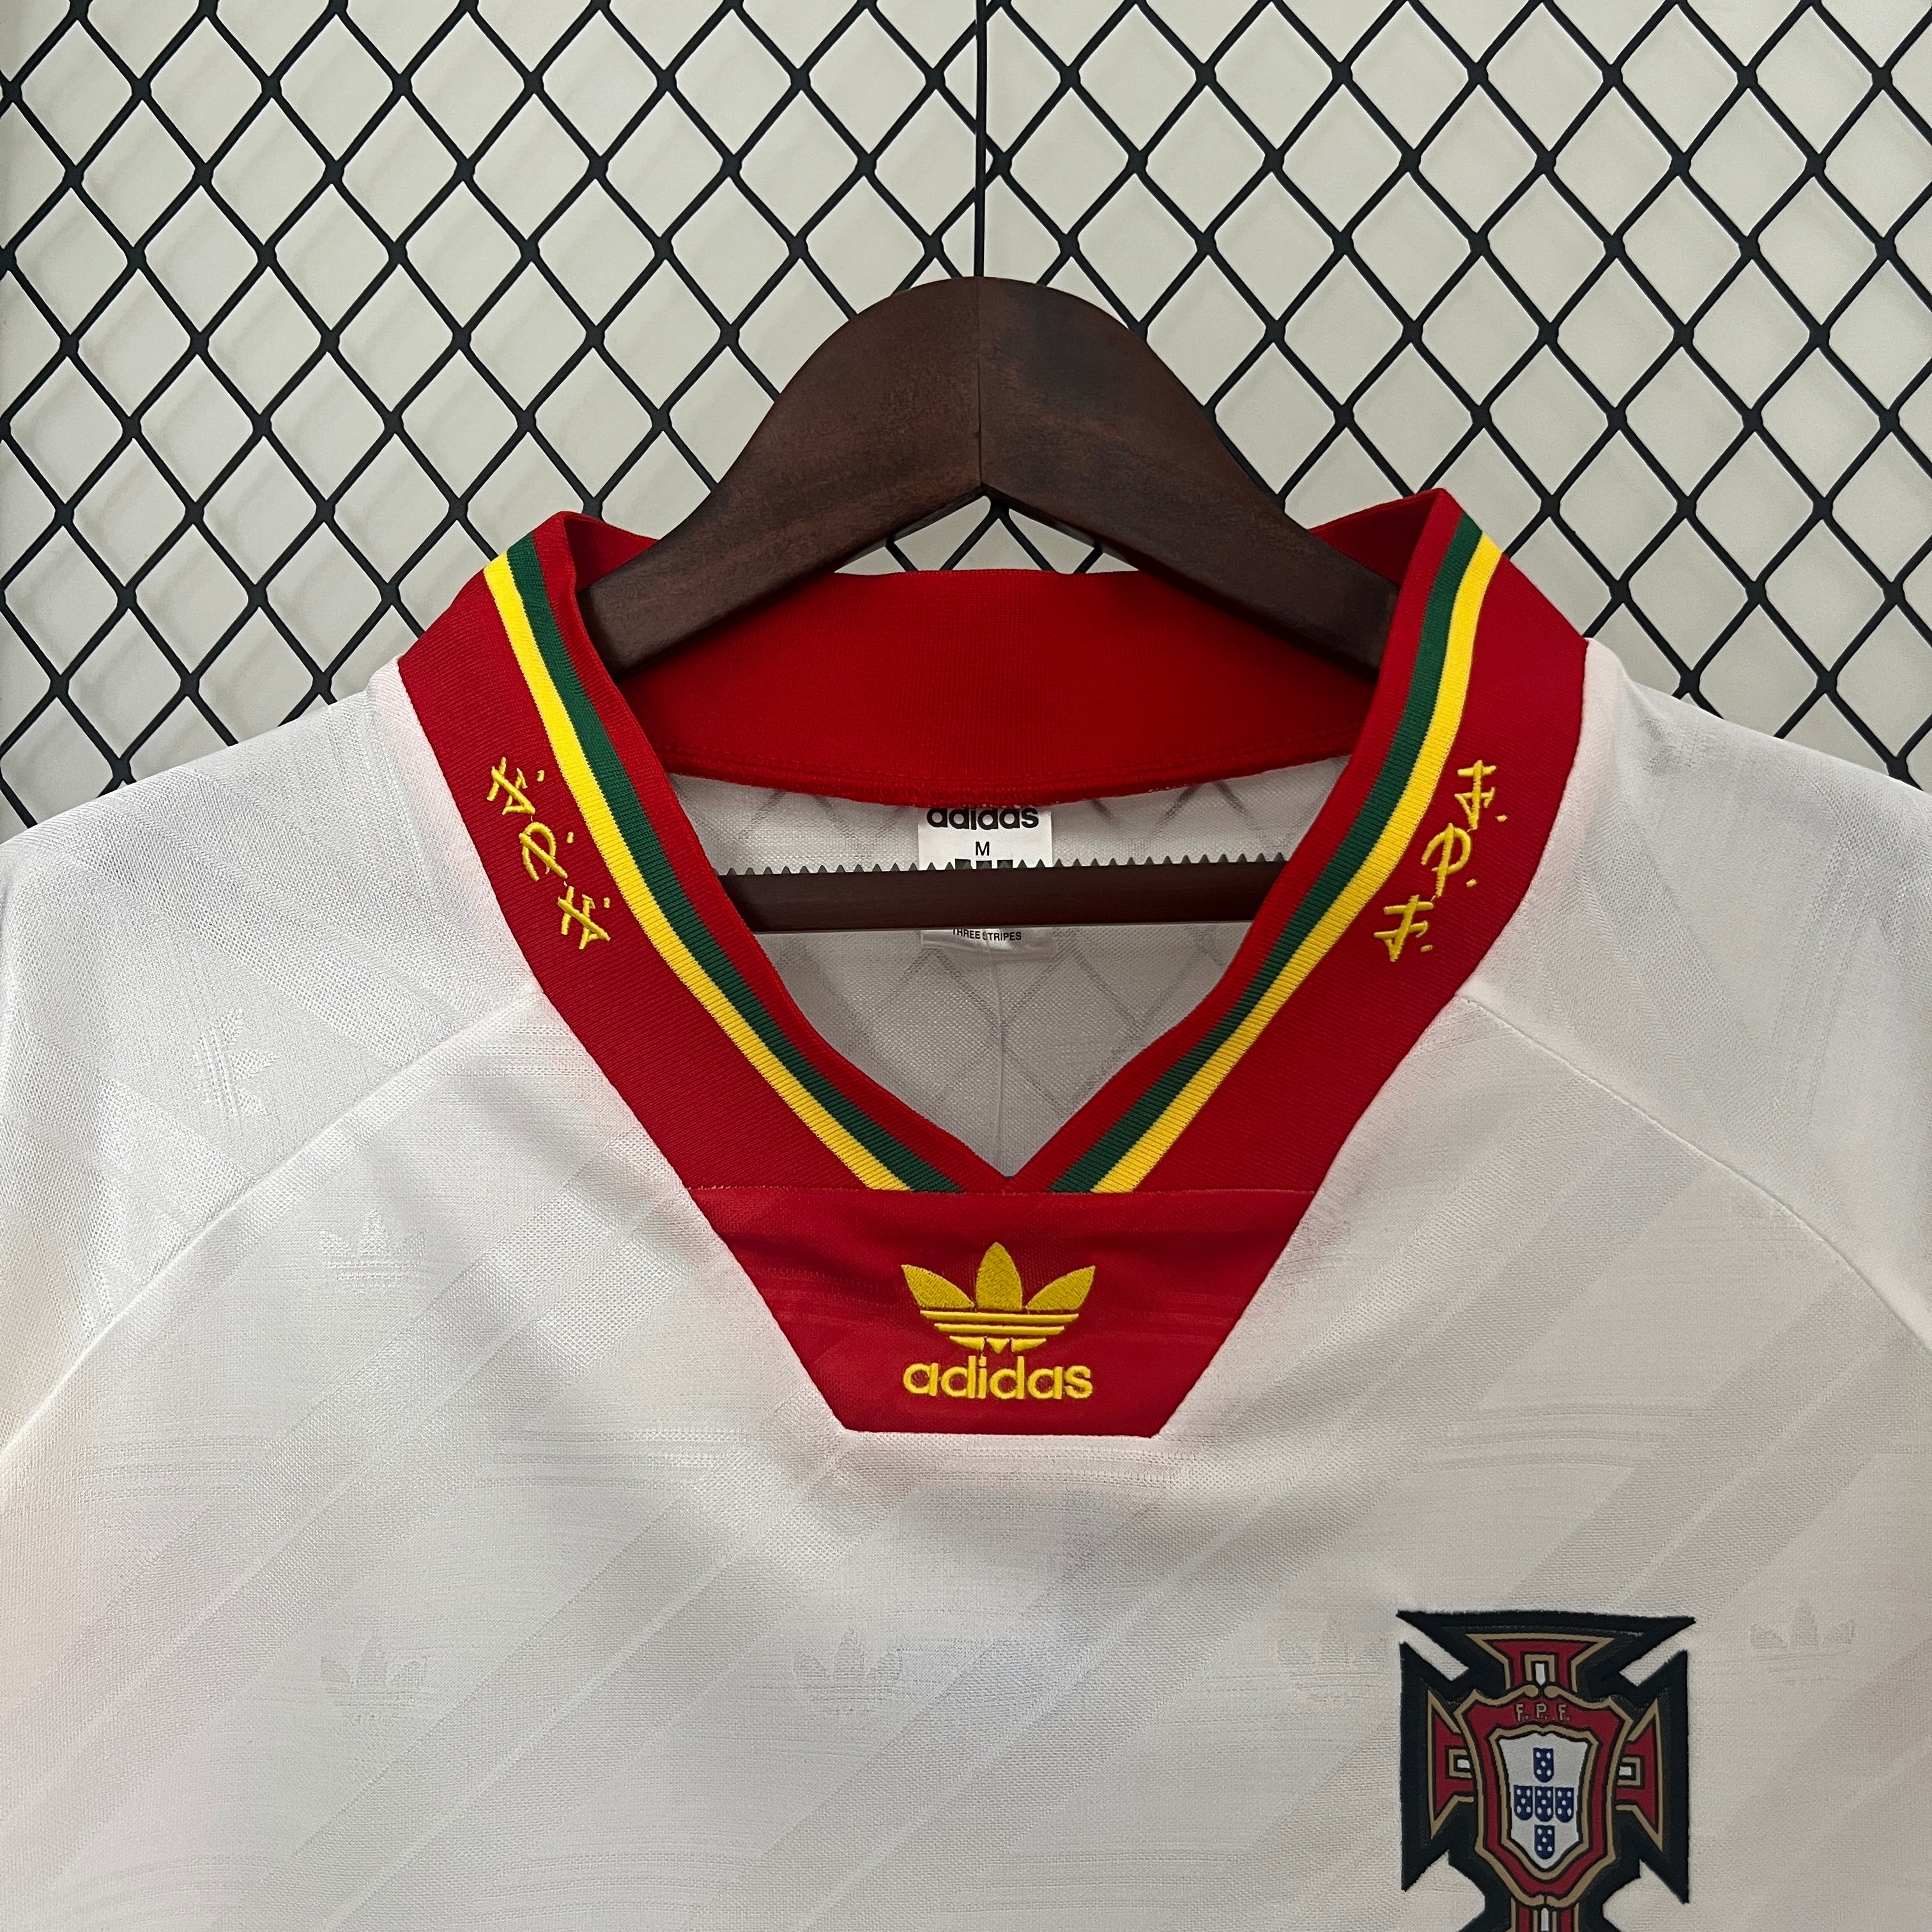 Portogallo Away - 1992